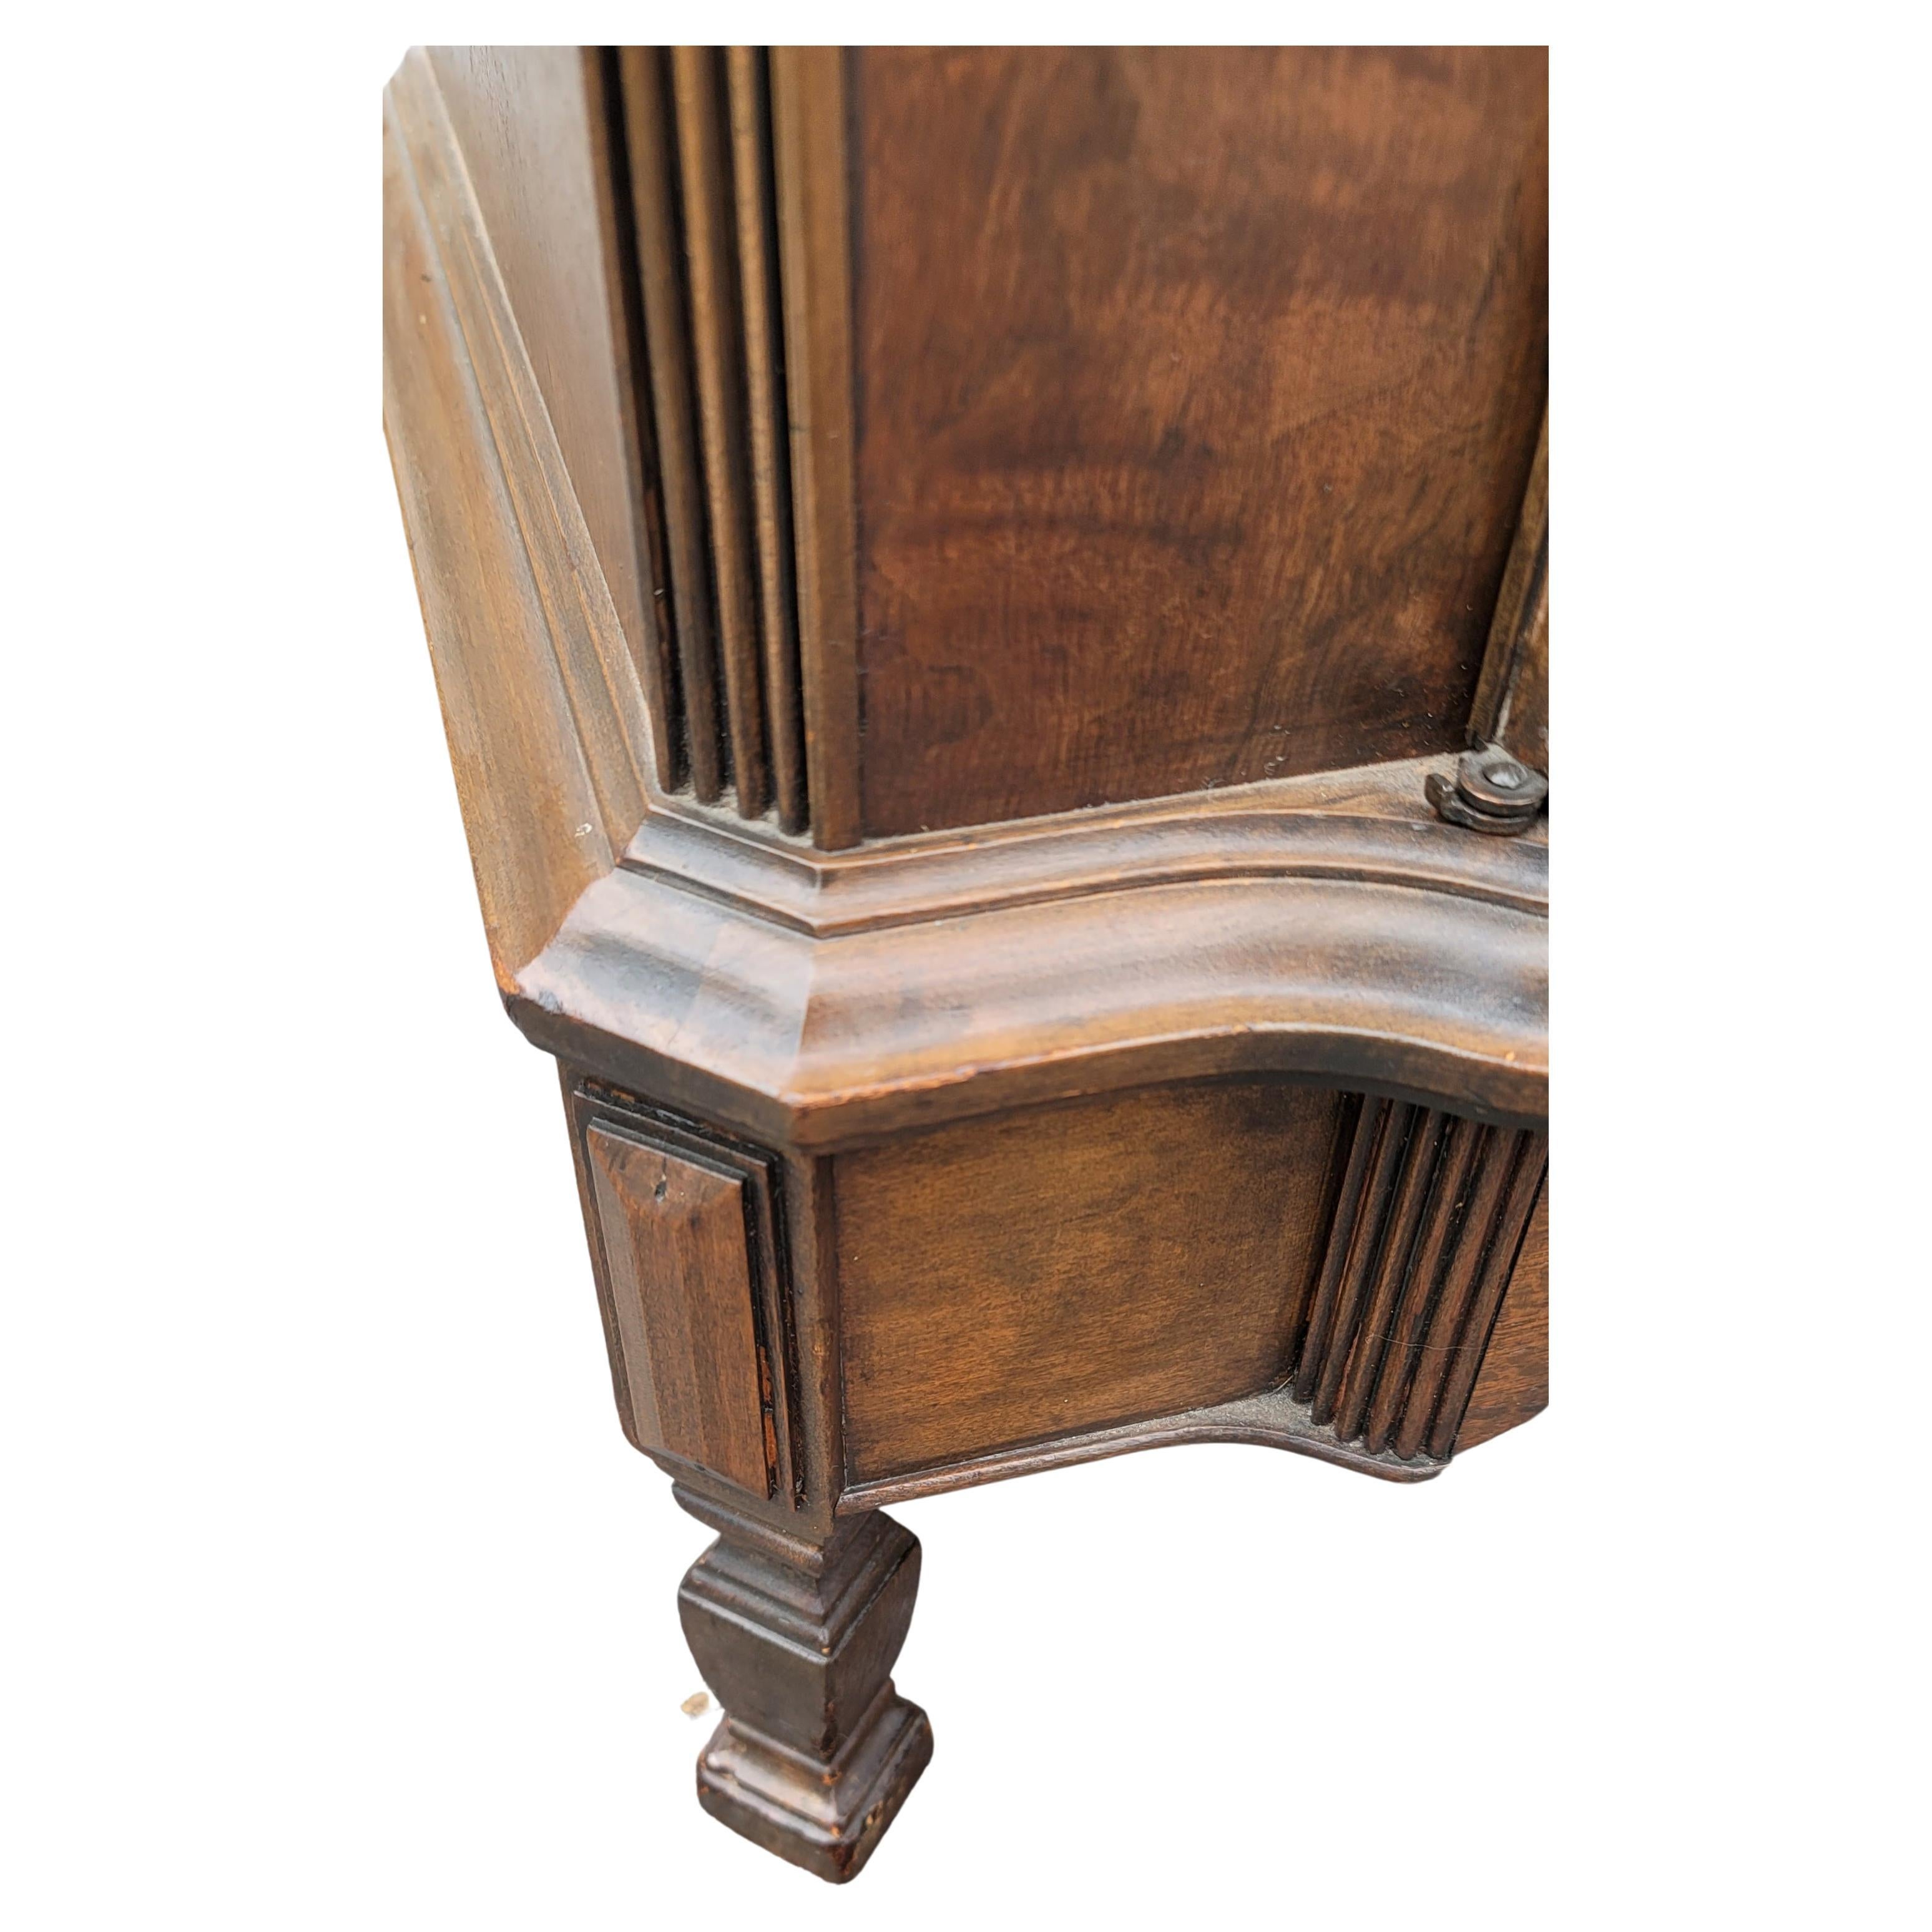 1930s Majestics Walnut Burlwood with Satinwood Inlays Storage Cabinet Armoire For Sale 1